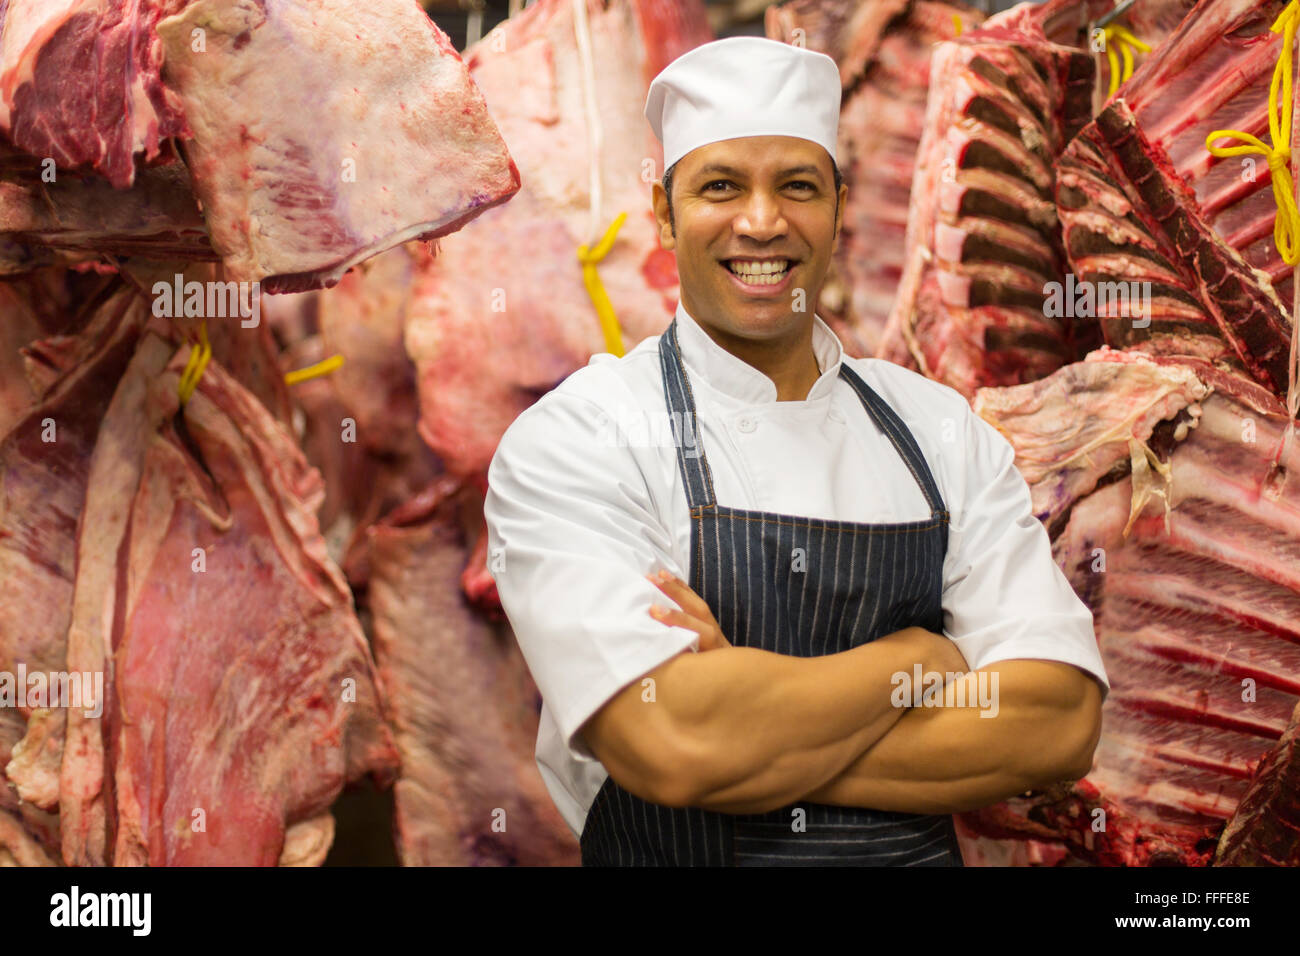 happy mature male butcher standing in butchery storage room Stock Photo